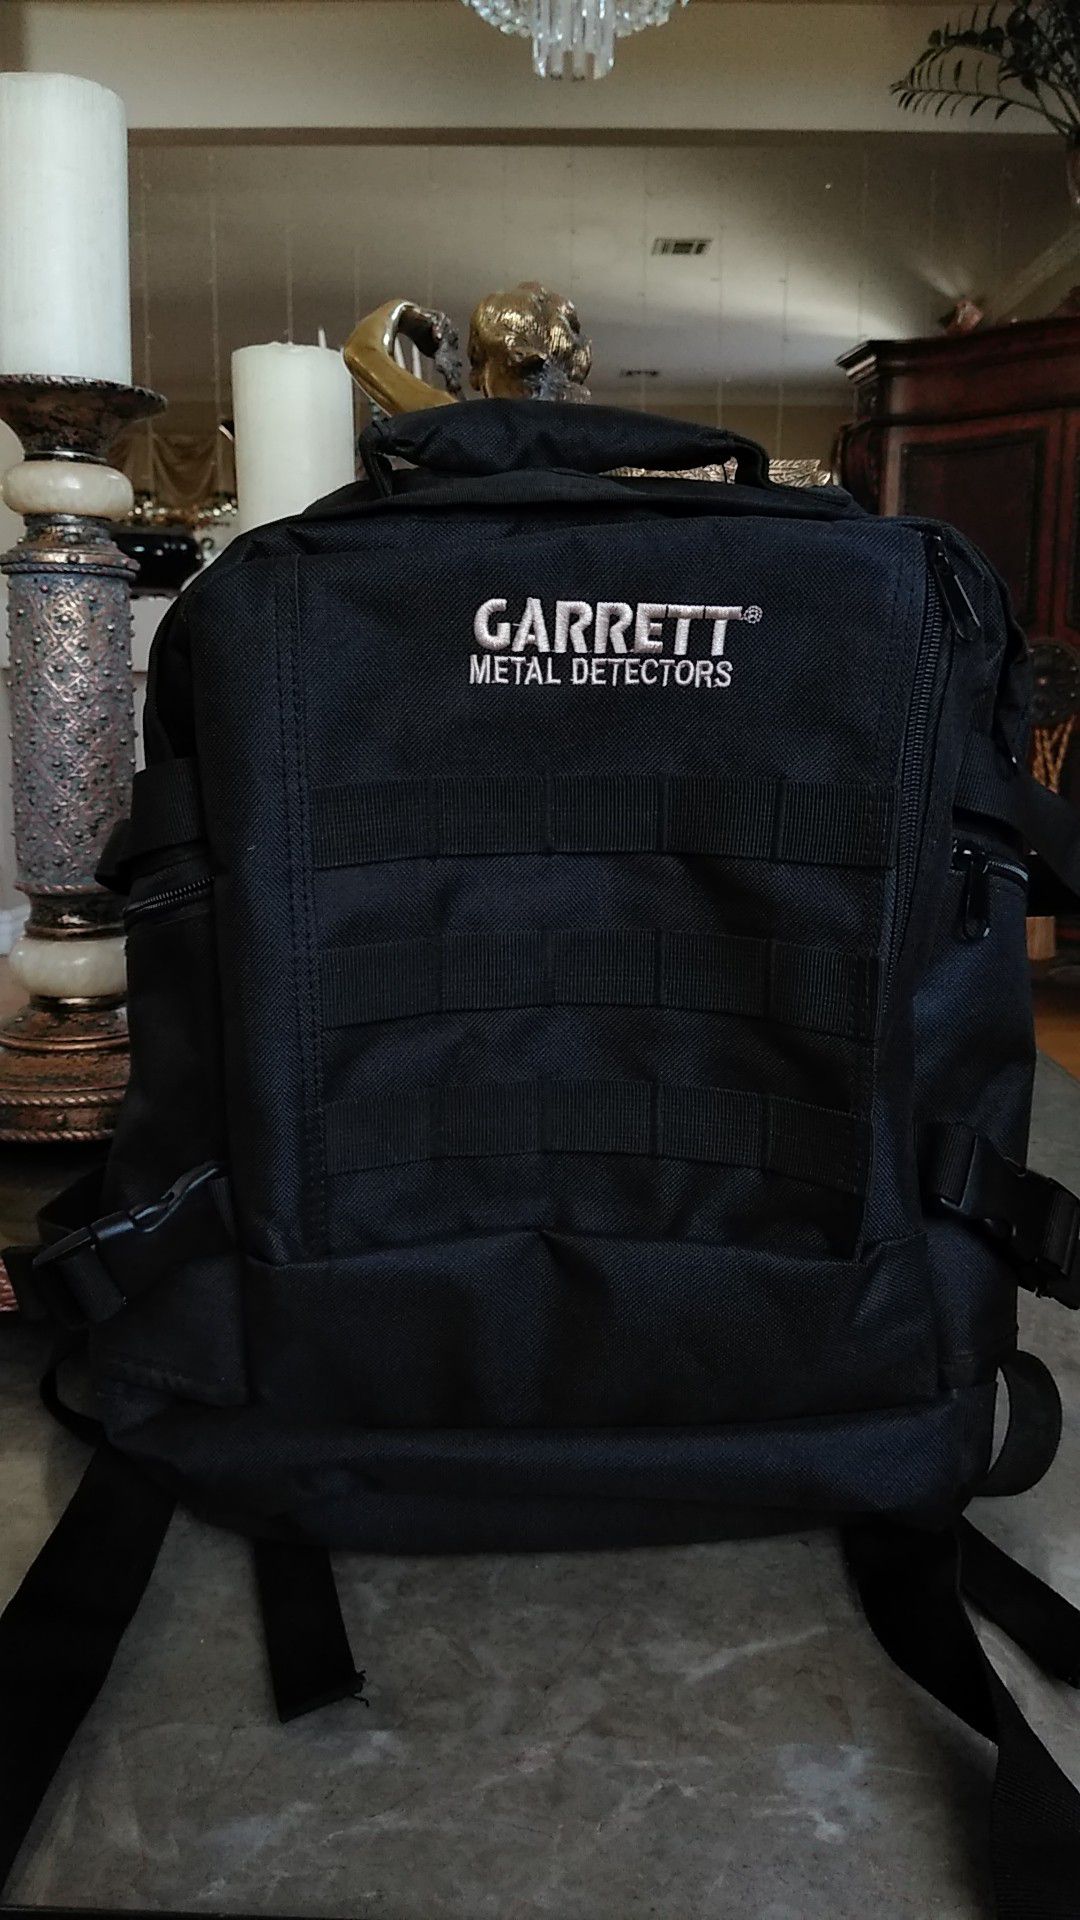 New Garrett metal detector backpack